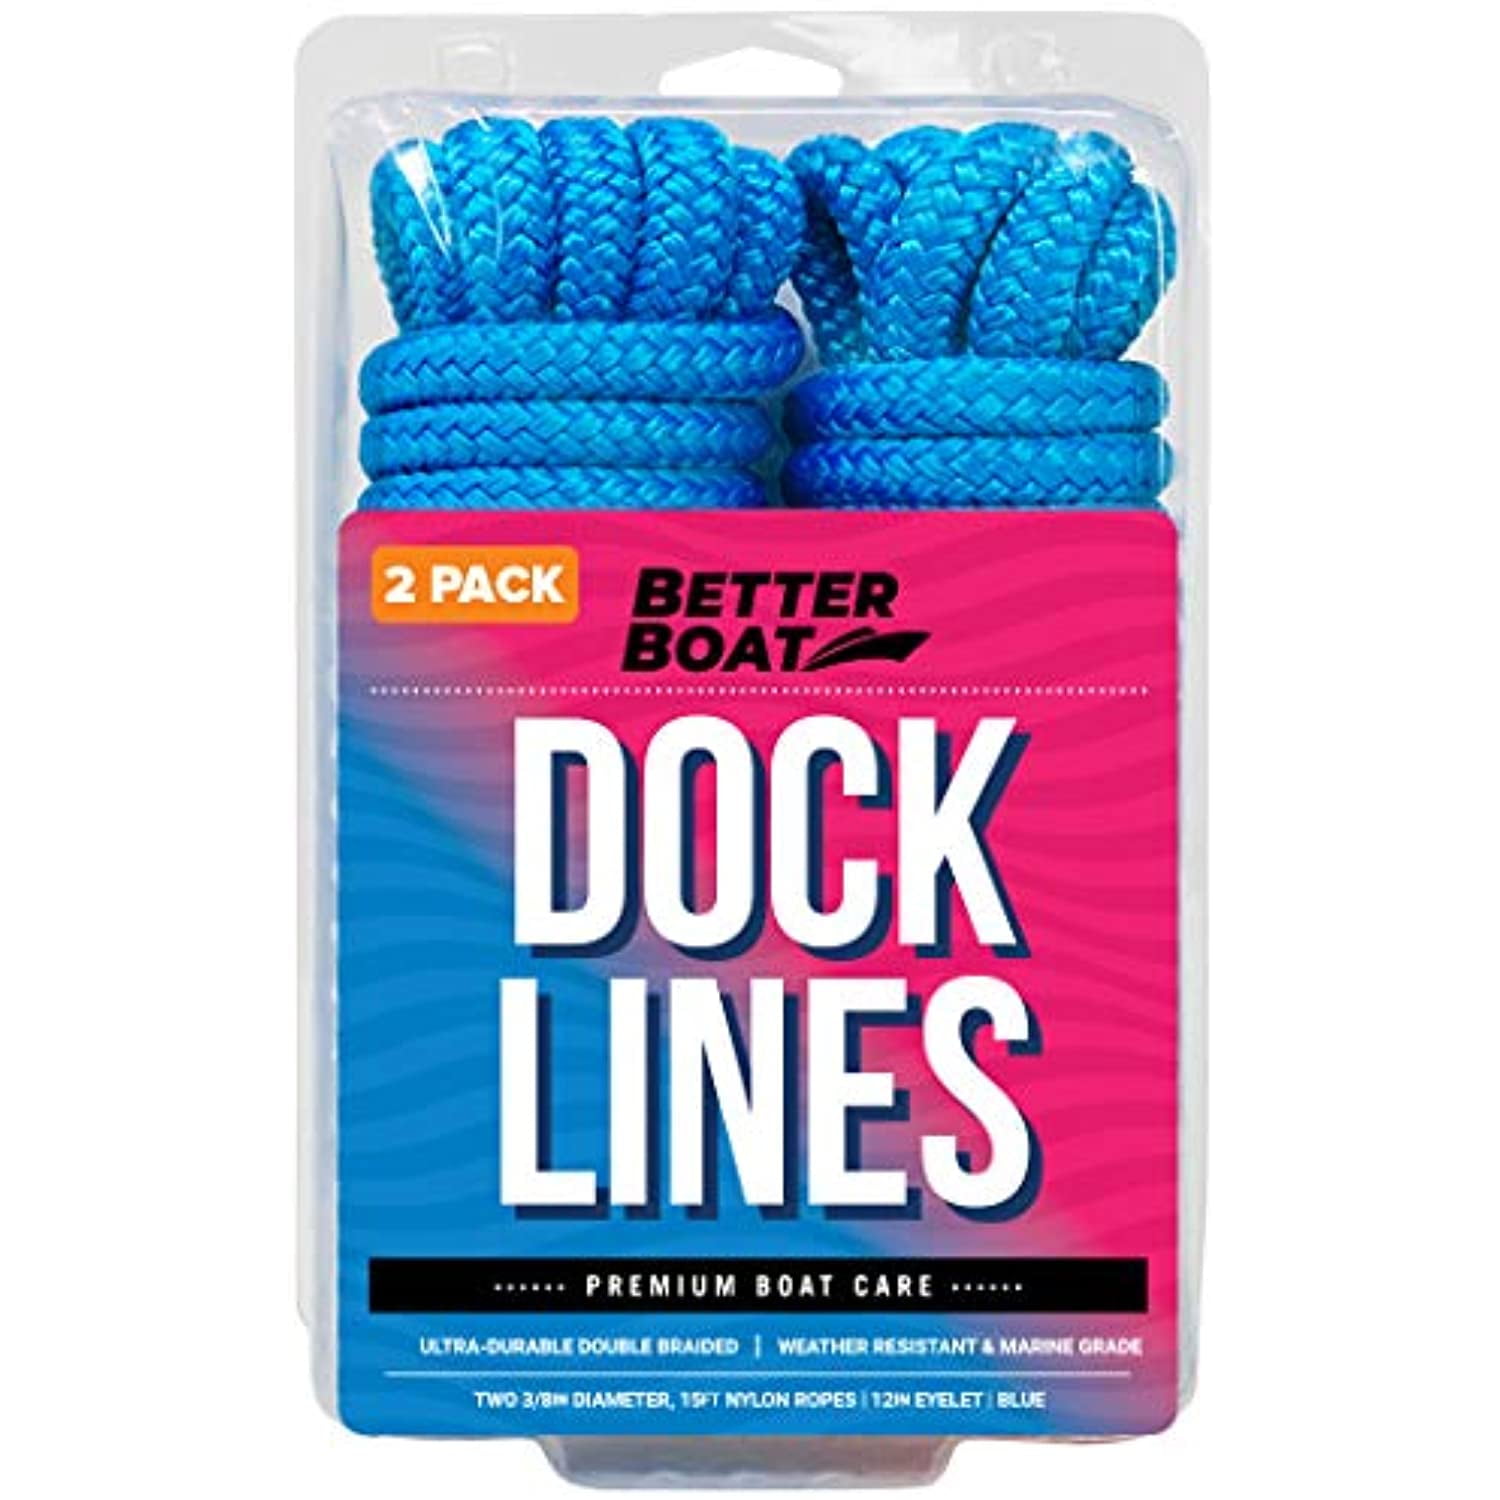 Dock Lines Boat Ropes for Docking 3/8 Line Braided Mooring Marine Rope  15FT Nylon Rope Boat Dock Lines for Docking Boat Lines Boating Rope Braided